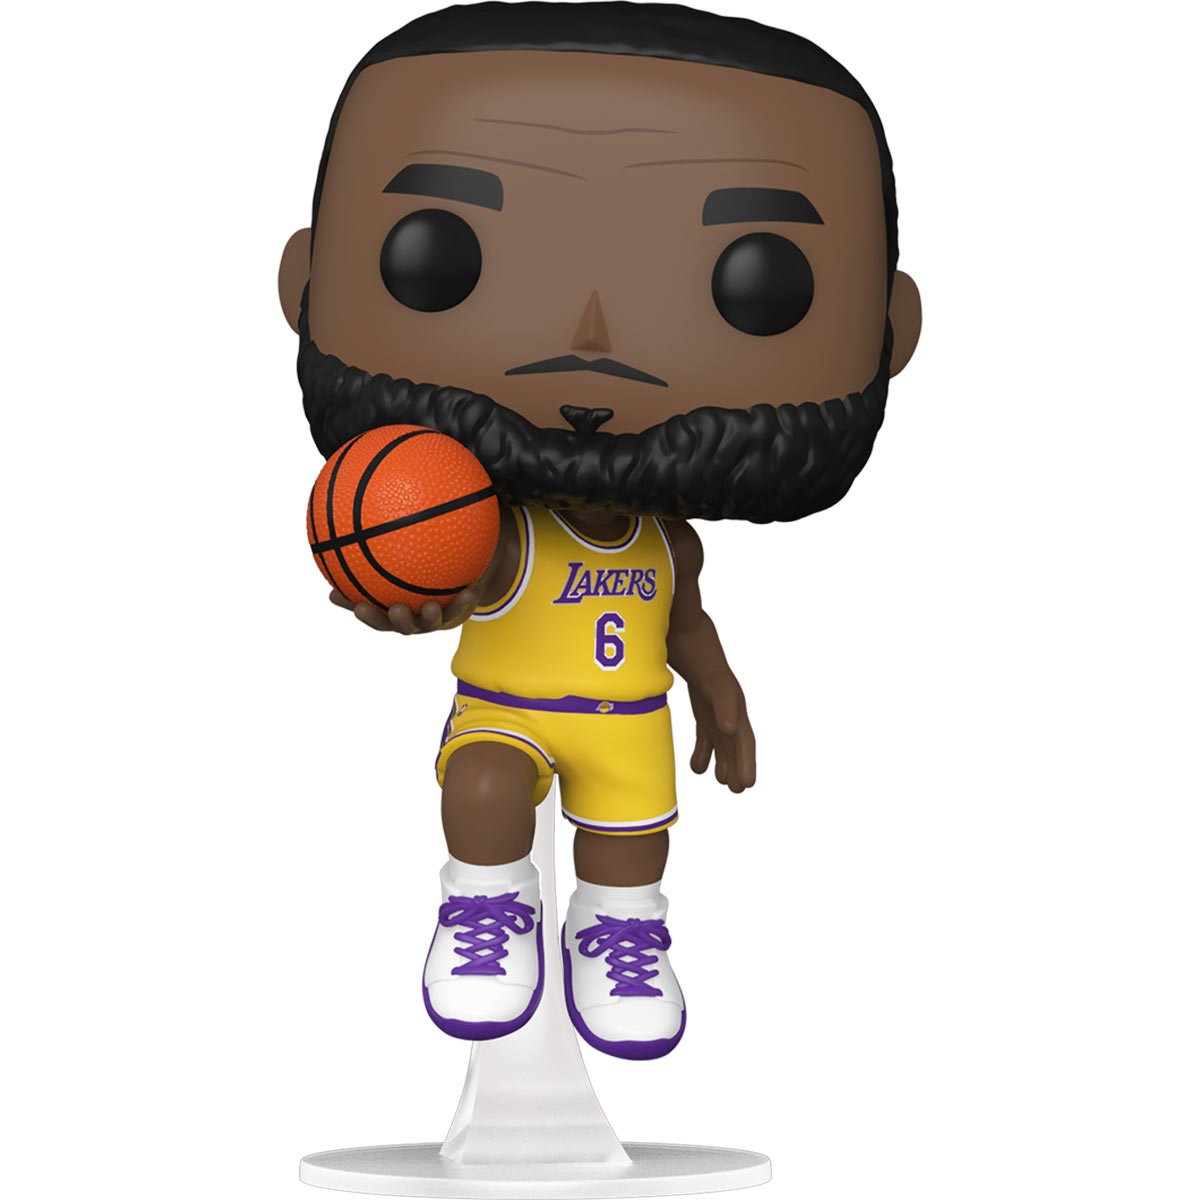 Funko Pop NBA: Lakers - LeBron James 6